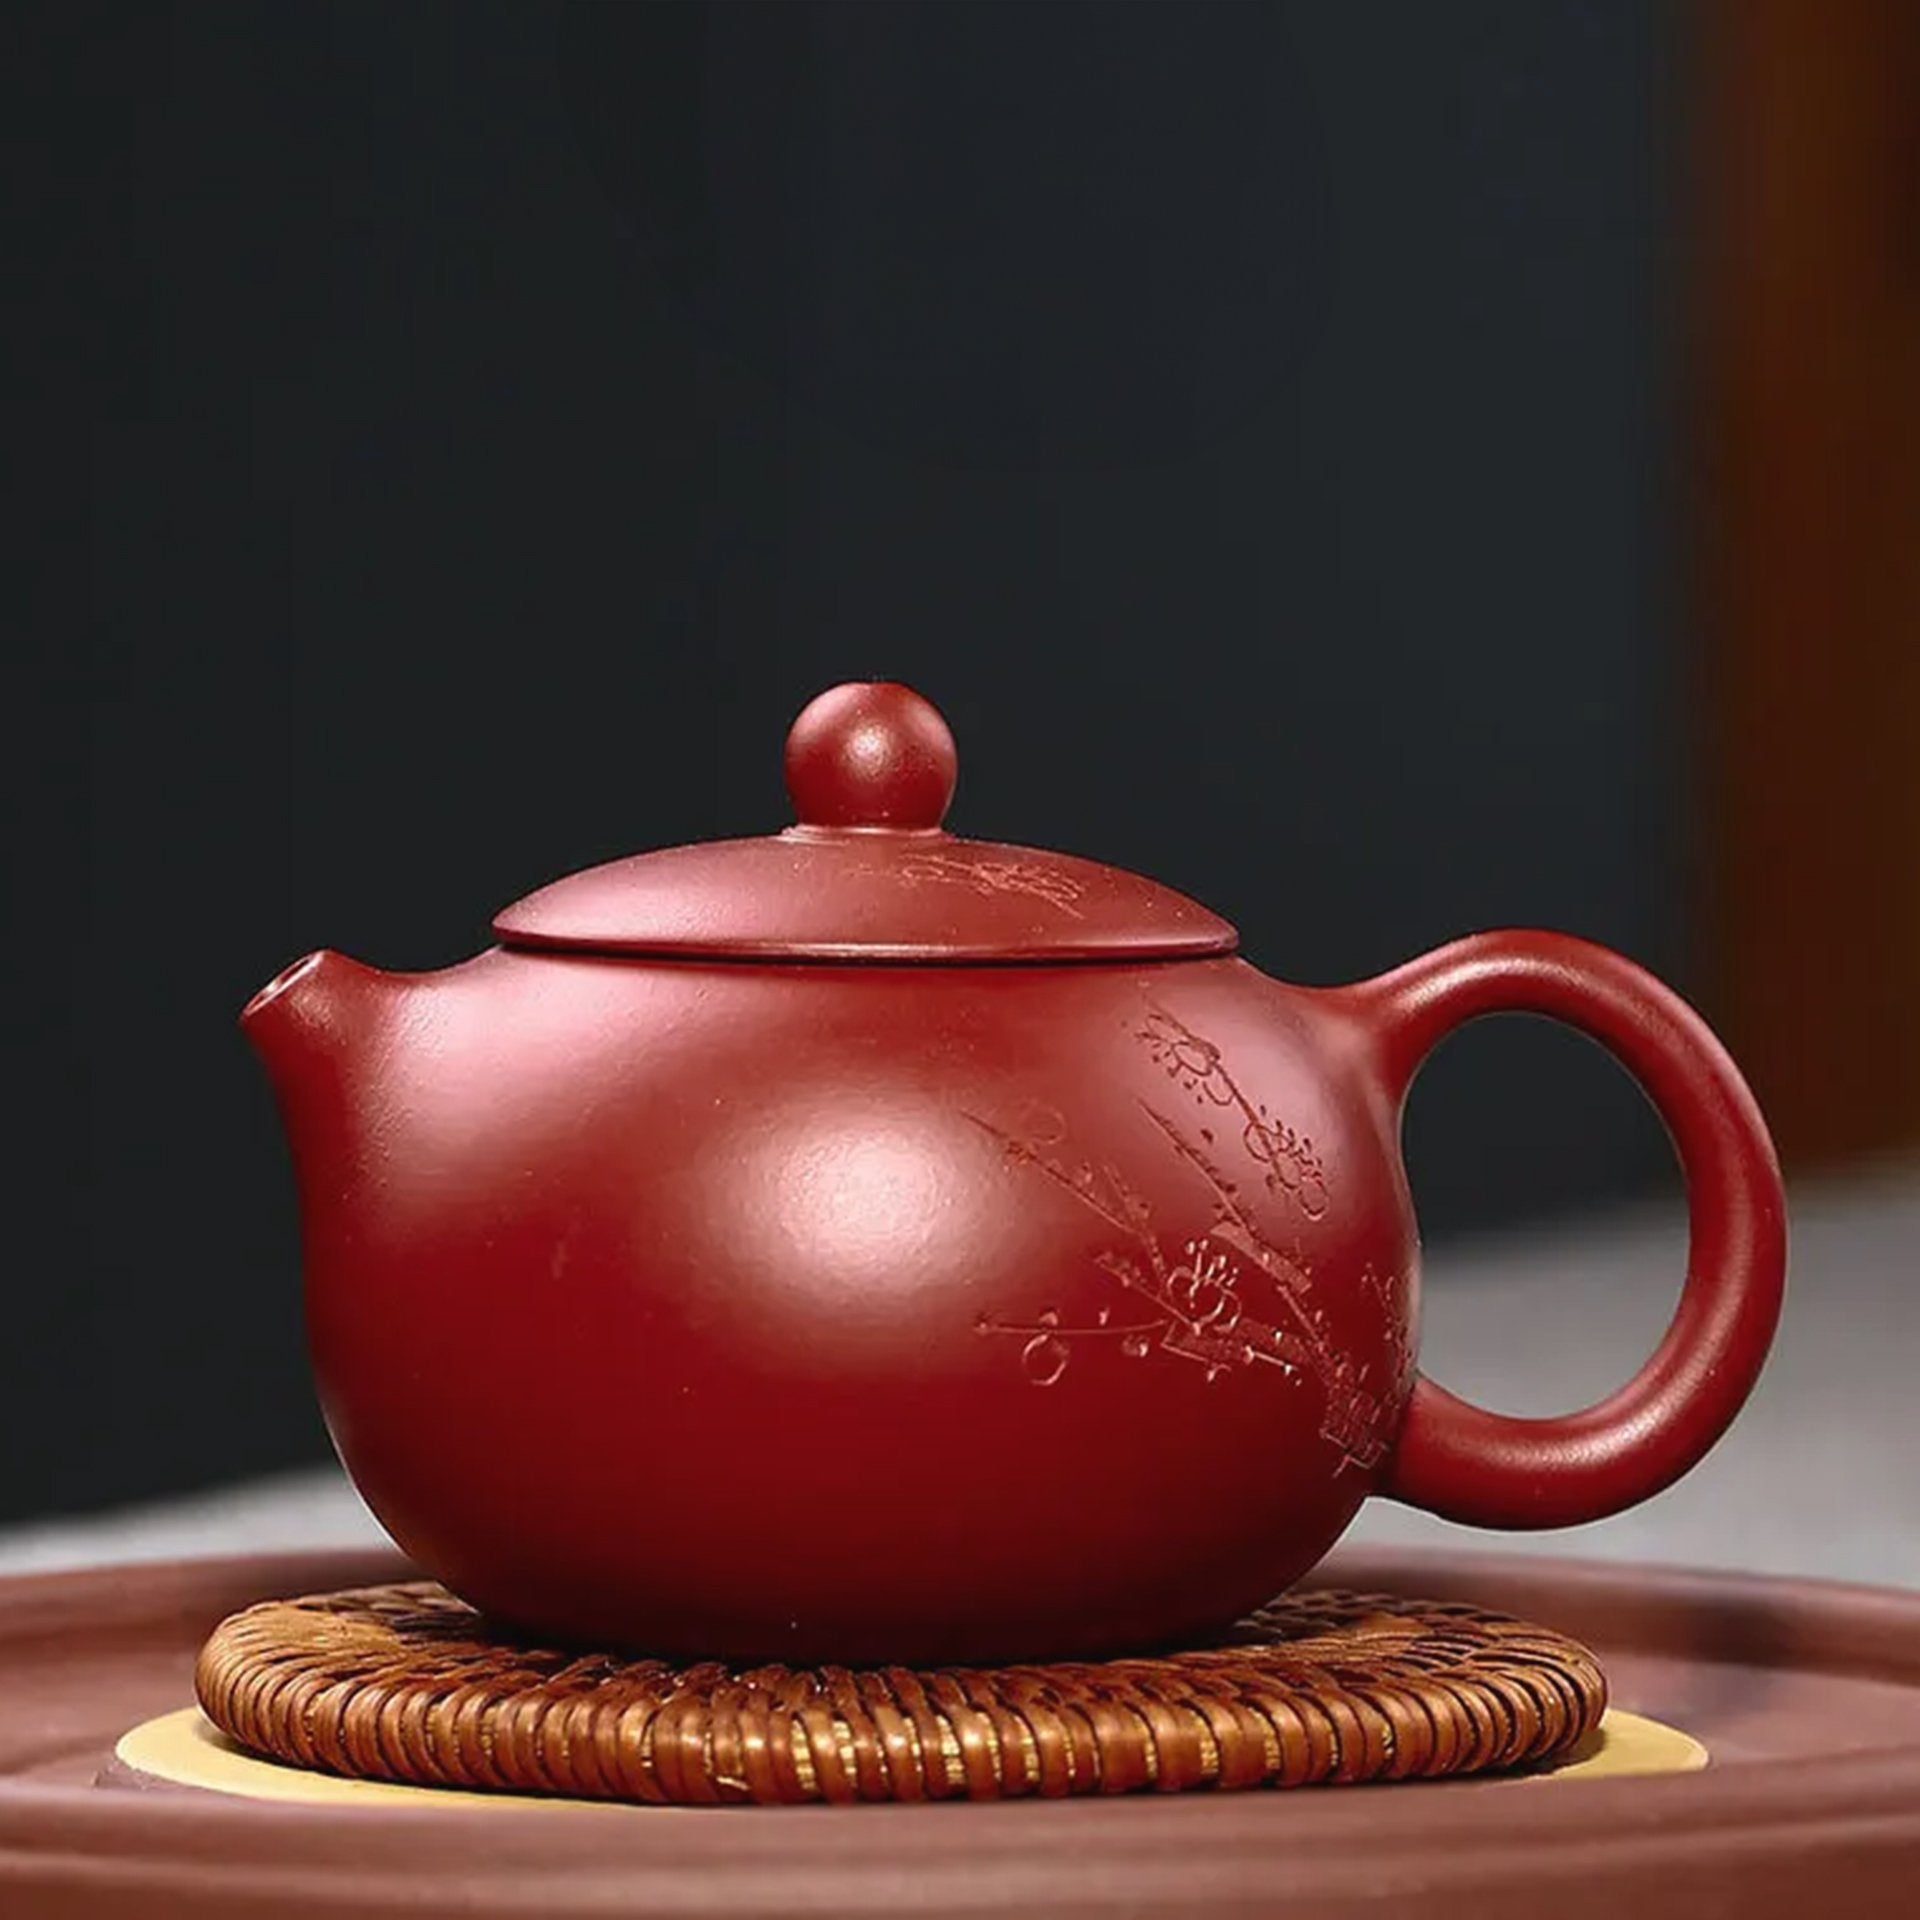 Close-up inside the red teapot showing maker's mark, detail of craftsmanship.